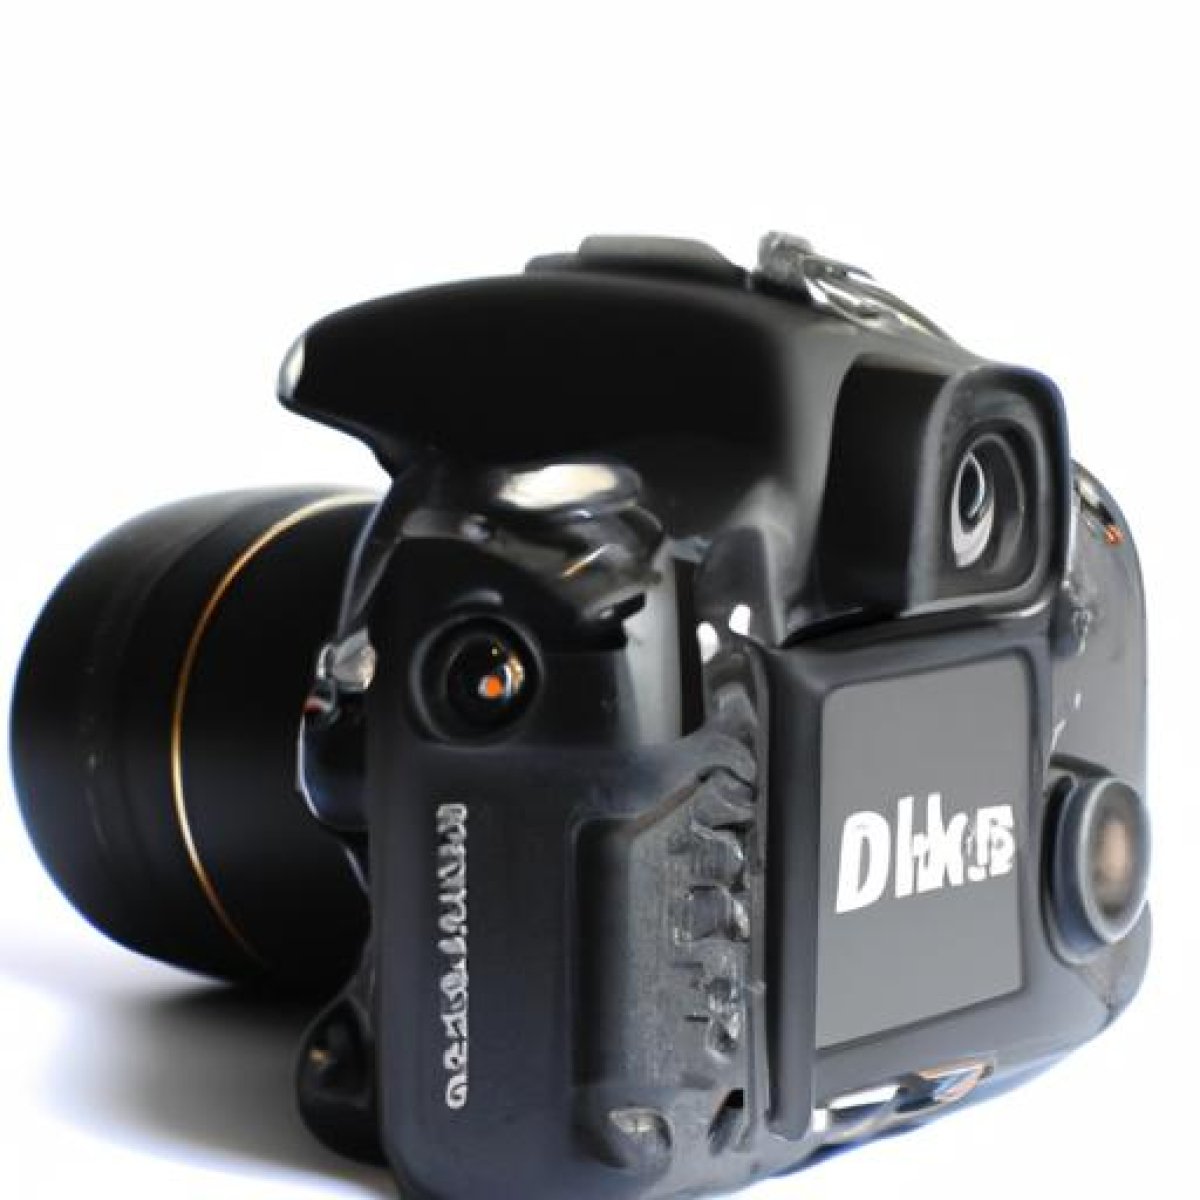 Nikon d700 digital slr camera